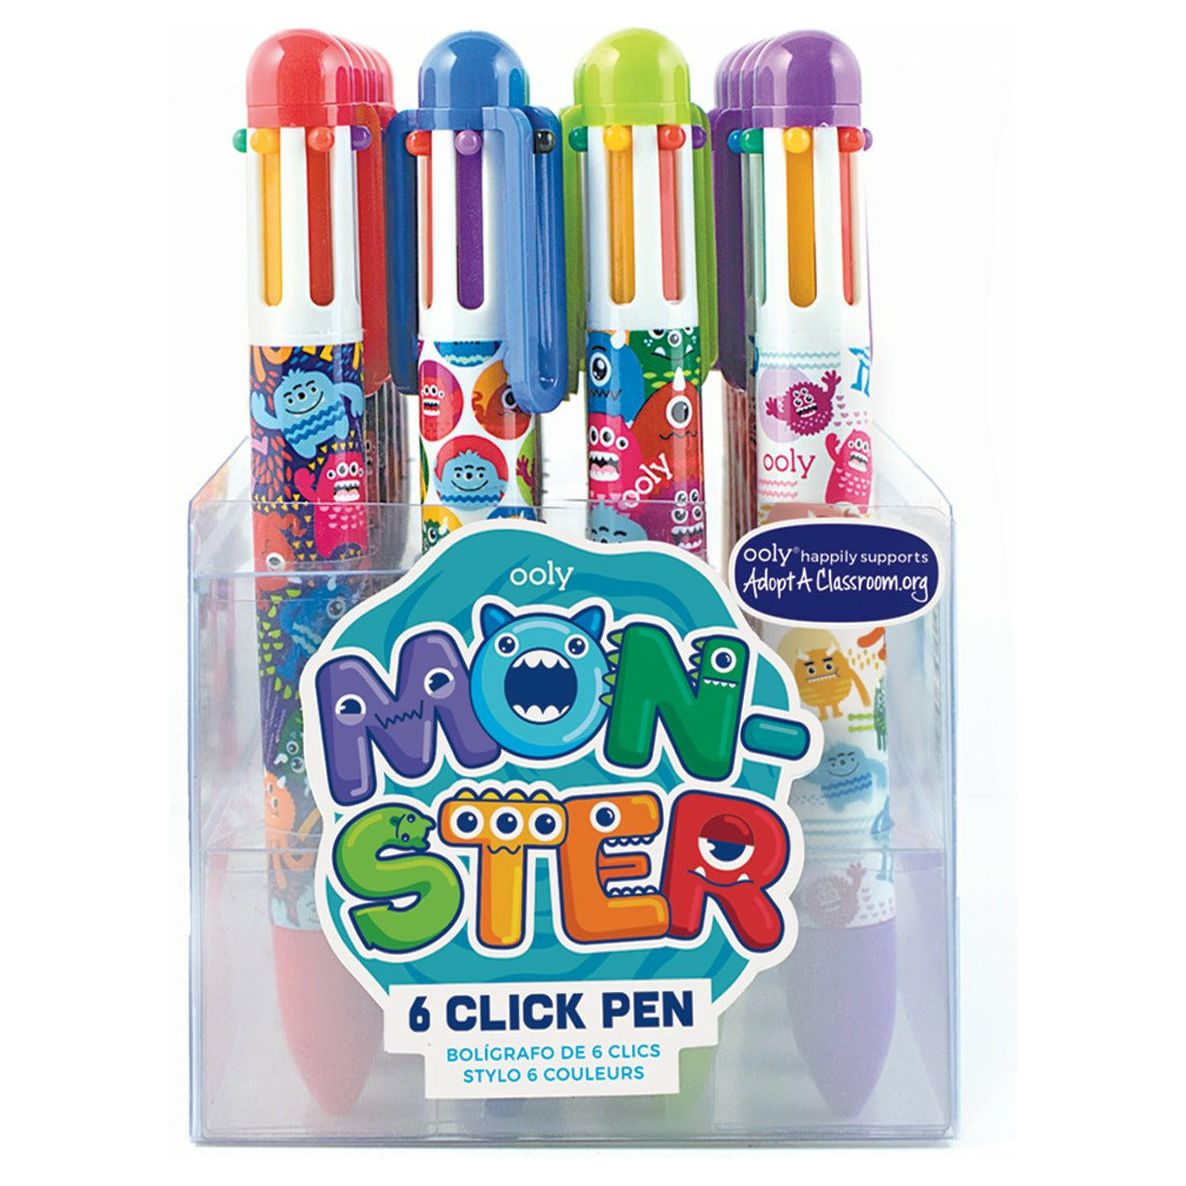 Sweet Things 6 Click Multi-colored pen - Fun Stuff Toys